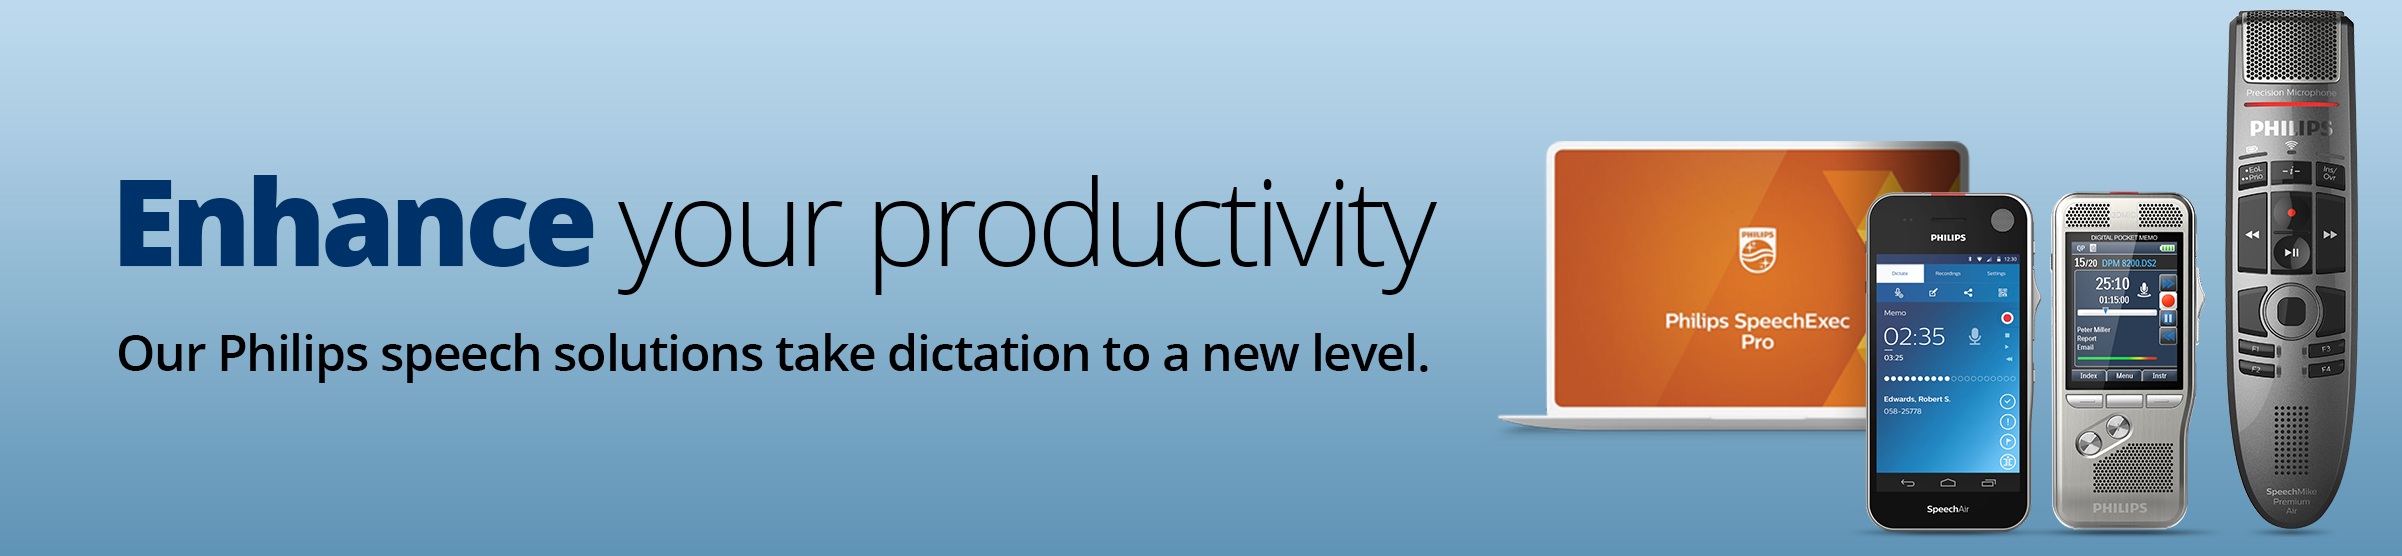 Enhance your productivity